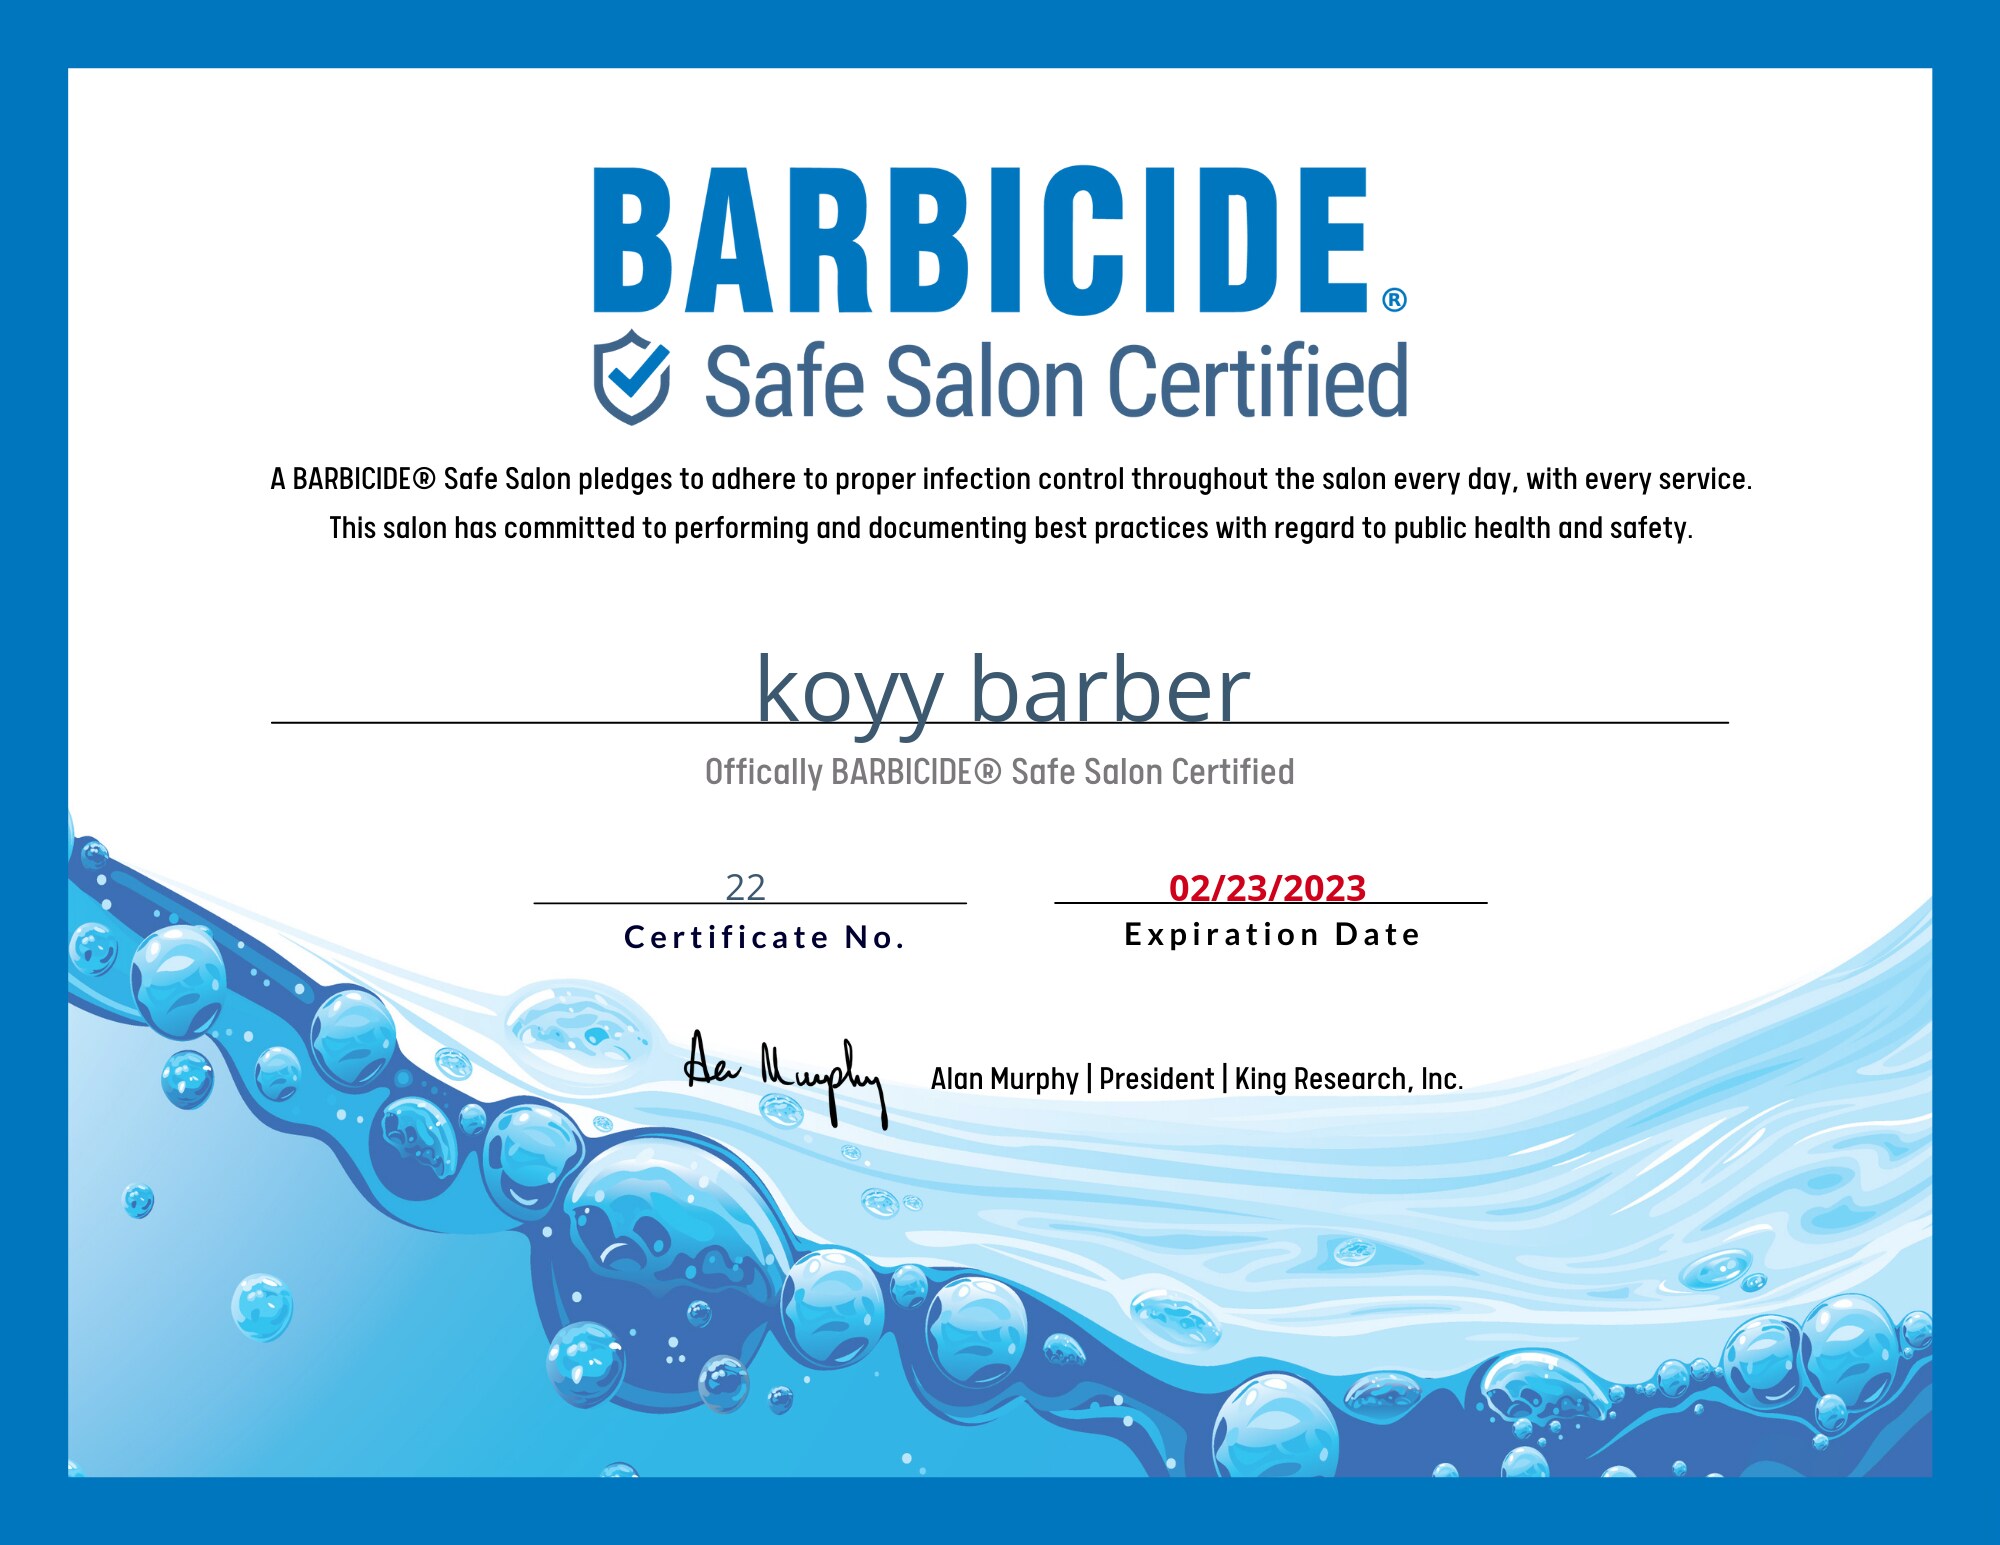 Digital certificate for a Safe Shop Certified merit sent to koyy barber from Safe Shop Certified